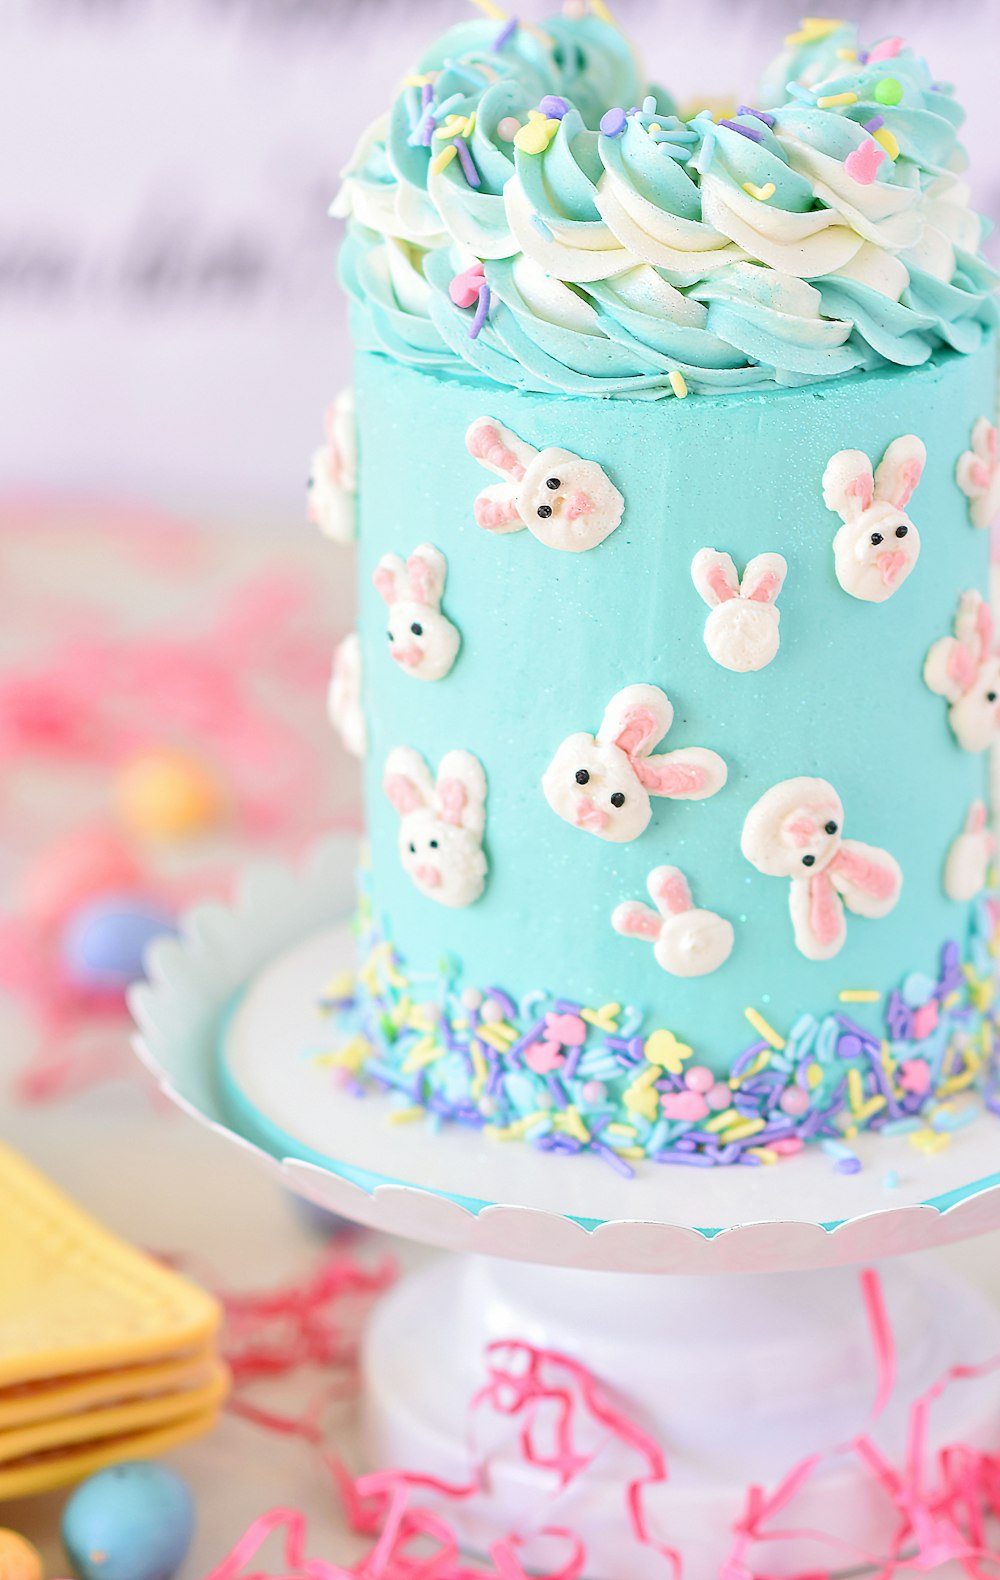 blue and white polka dot cupcake